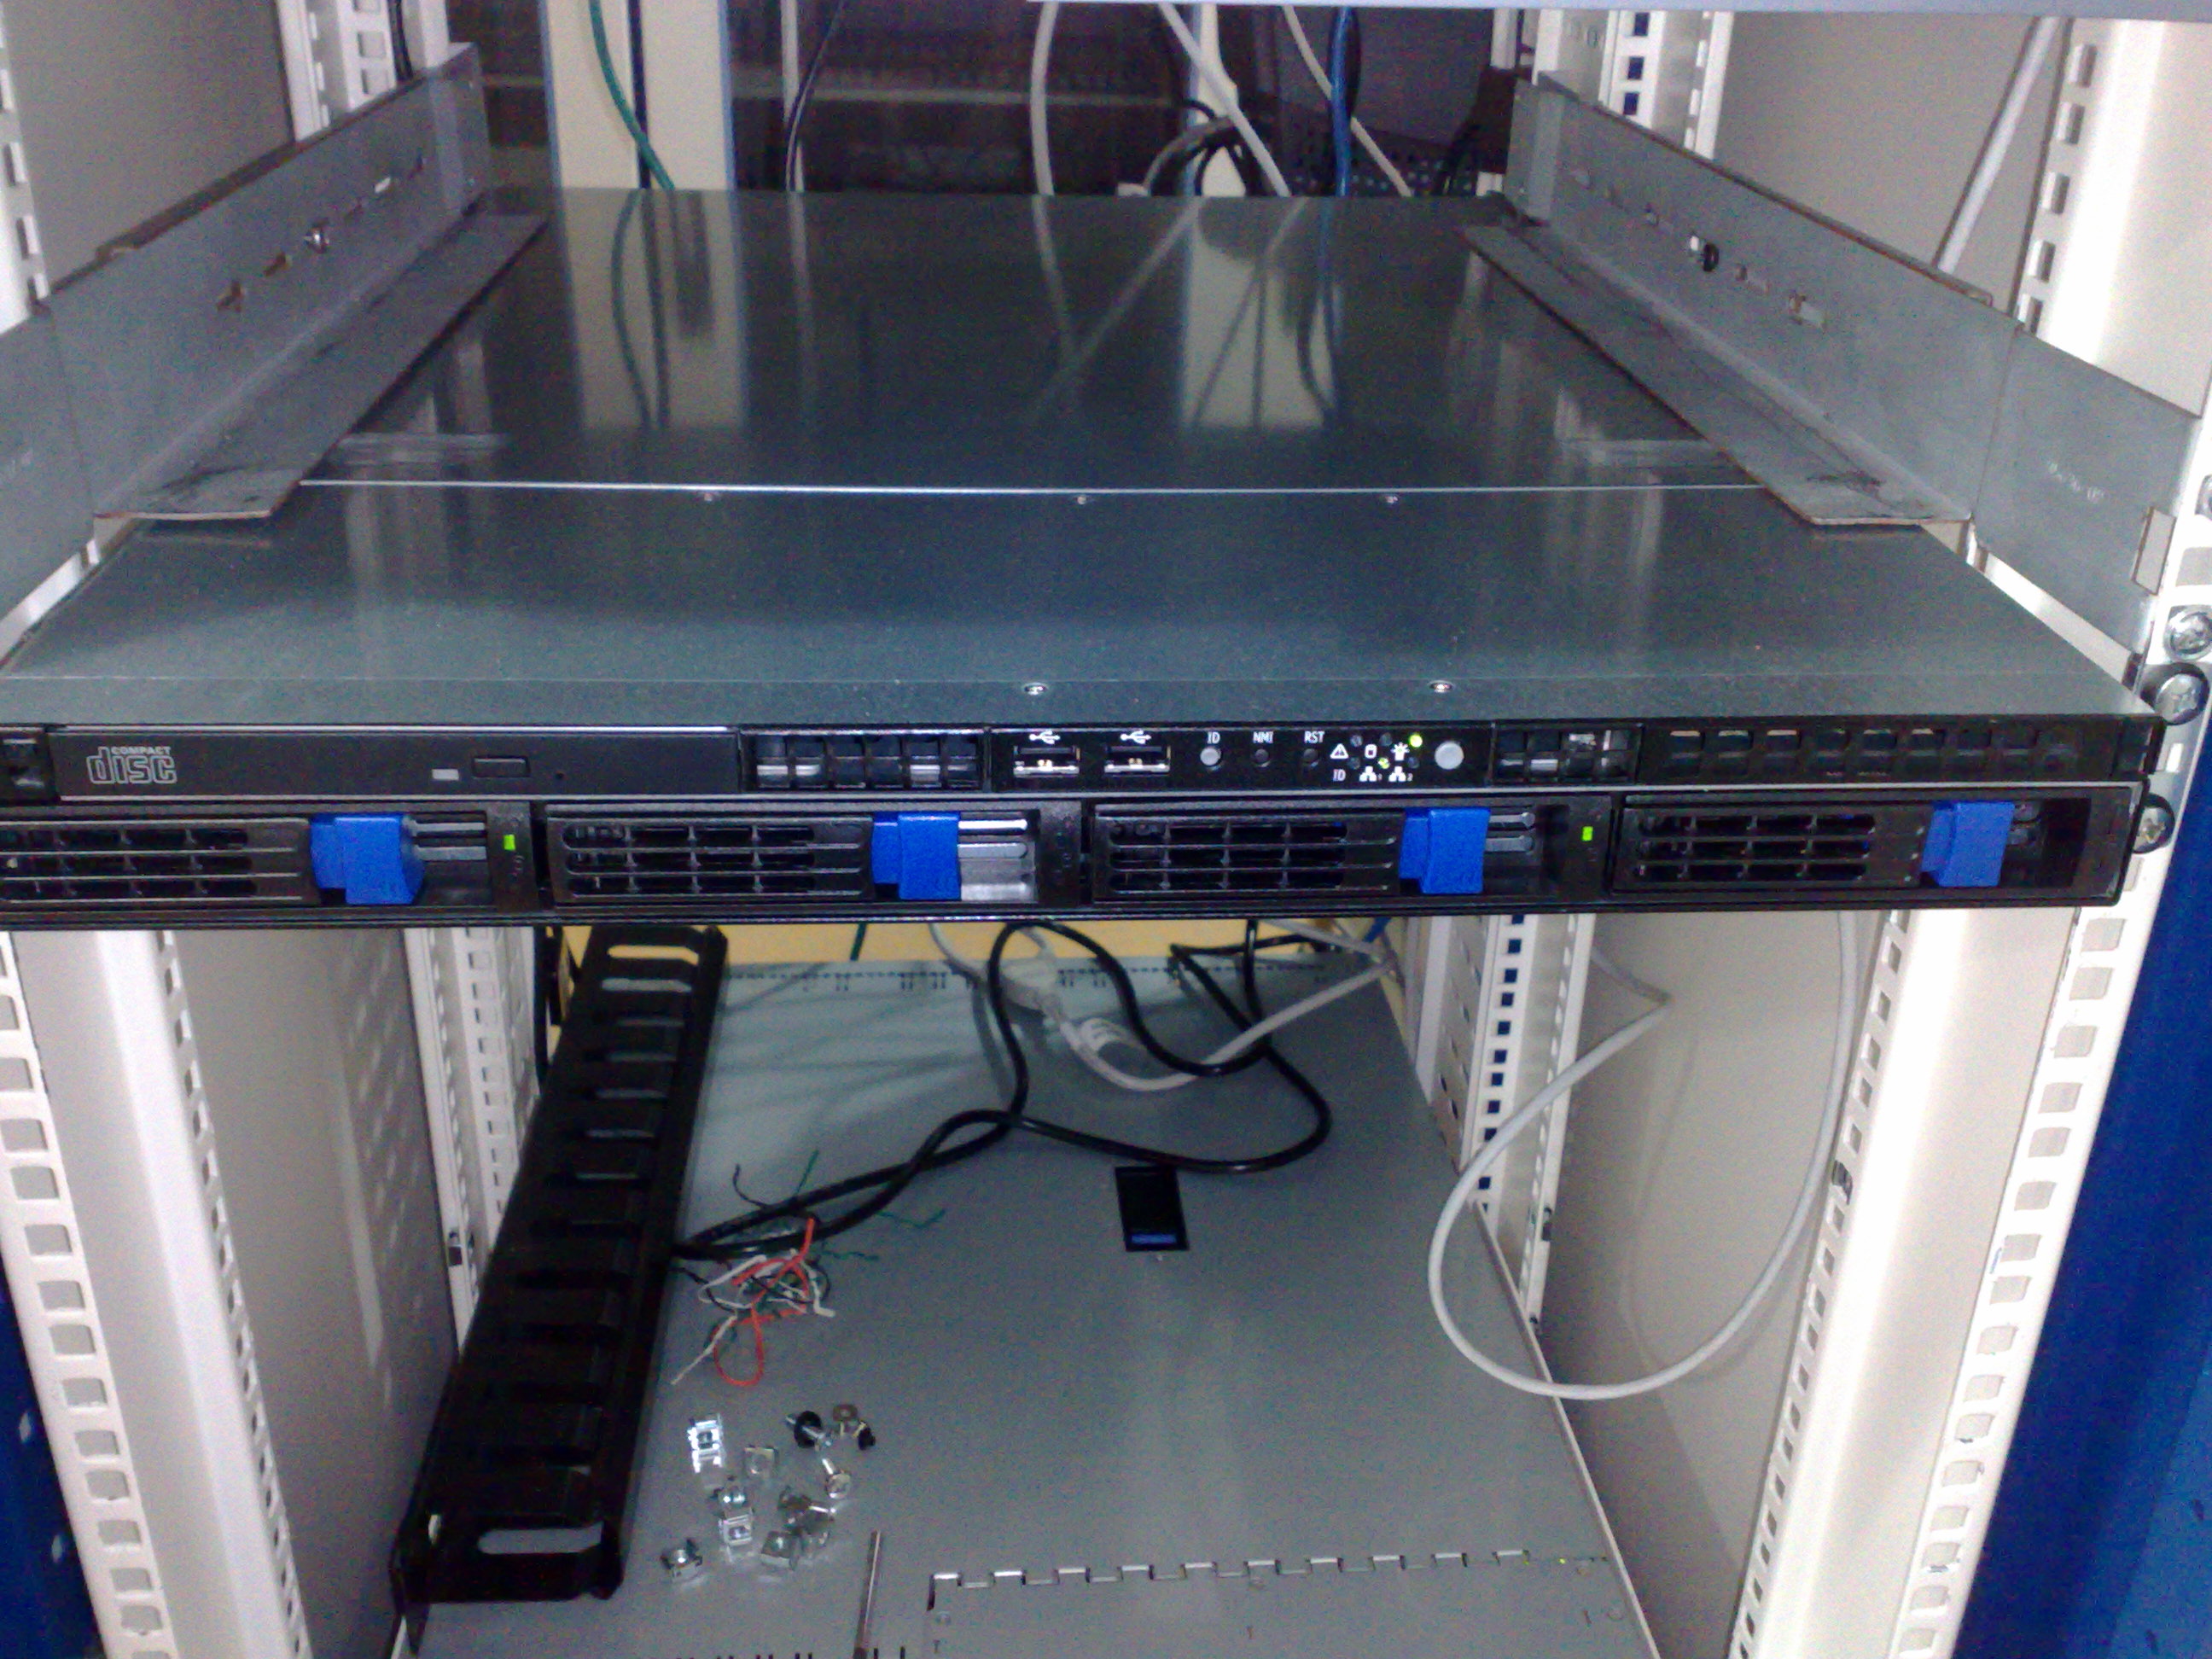 Tyan server at 1-Net rack